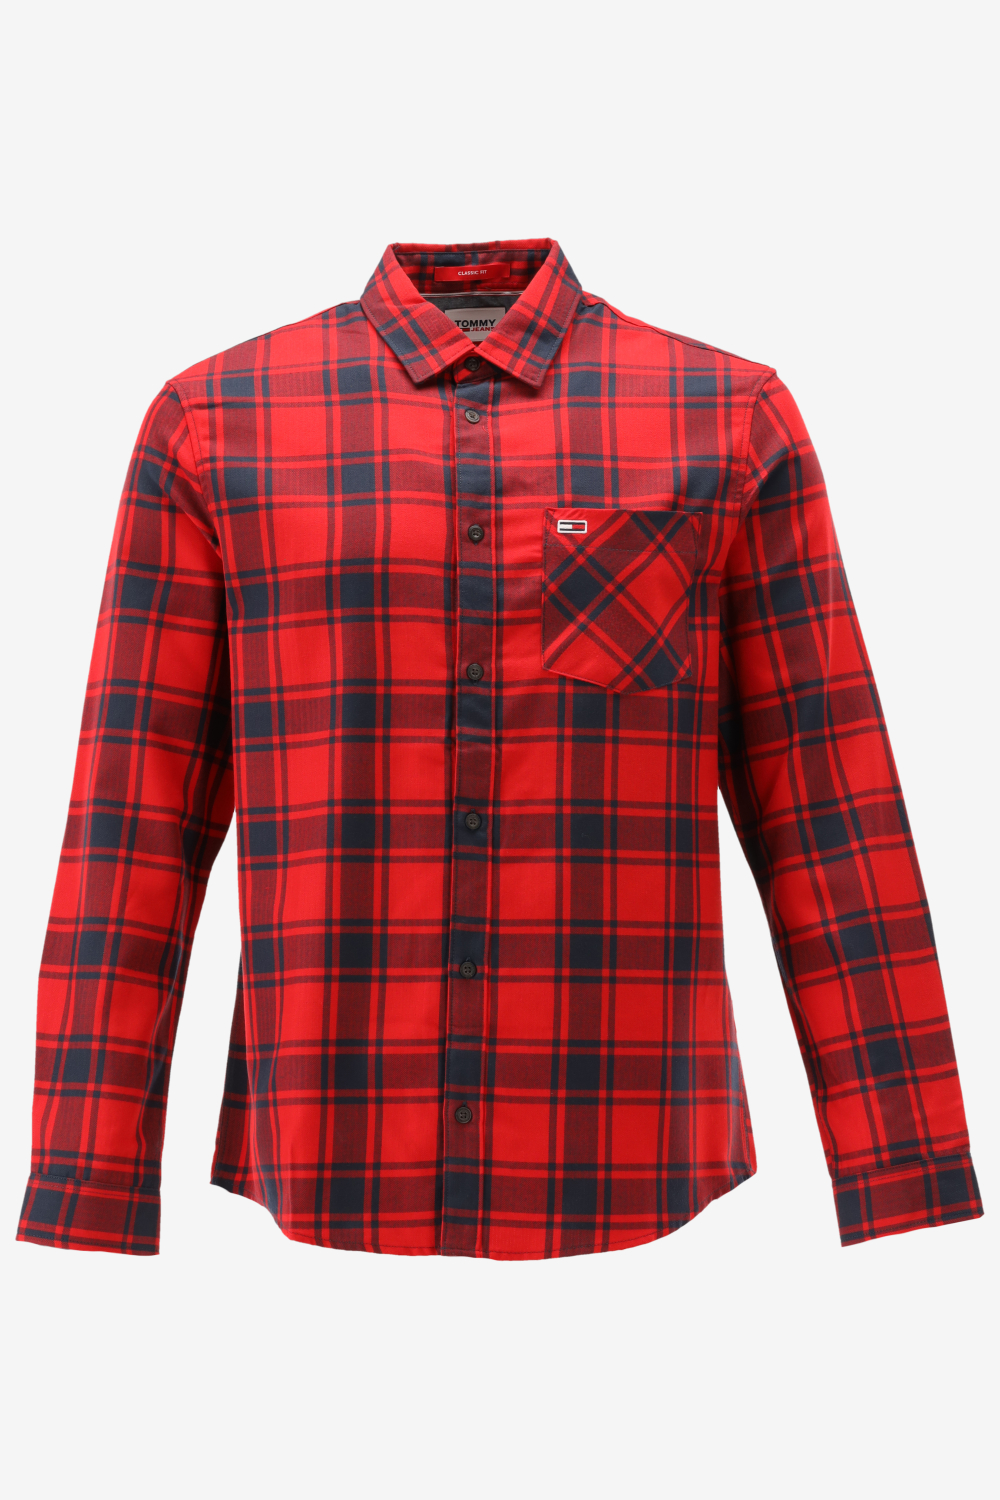 Tommy Jeans Tjm Check Flannel Shirt Overhemden - Rood